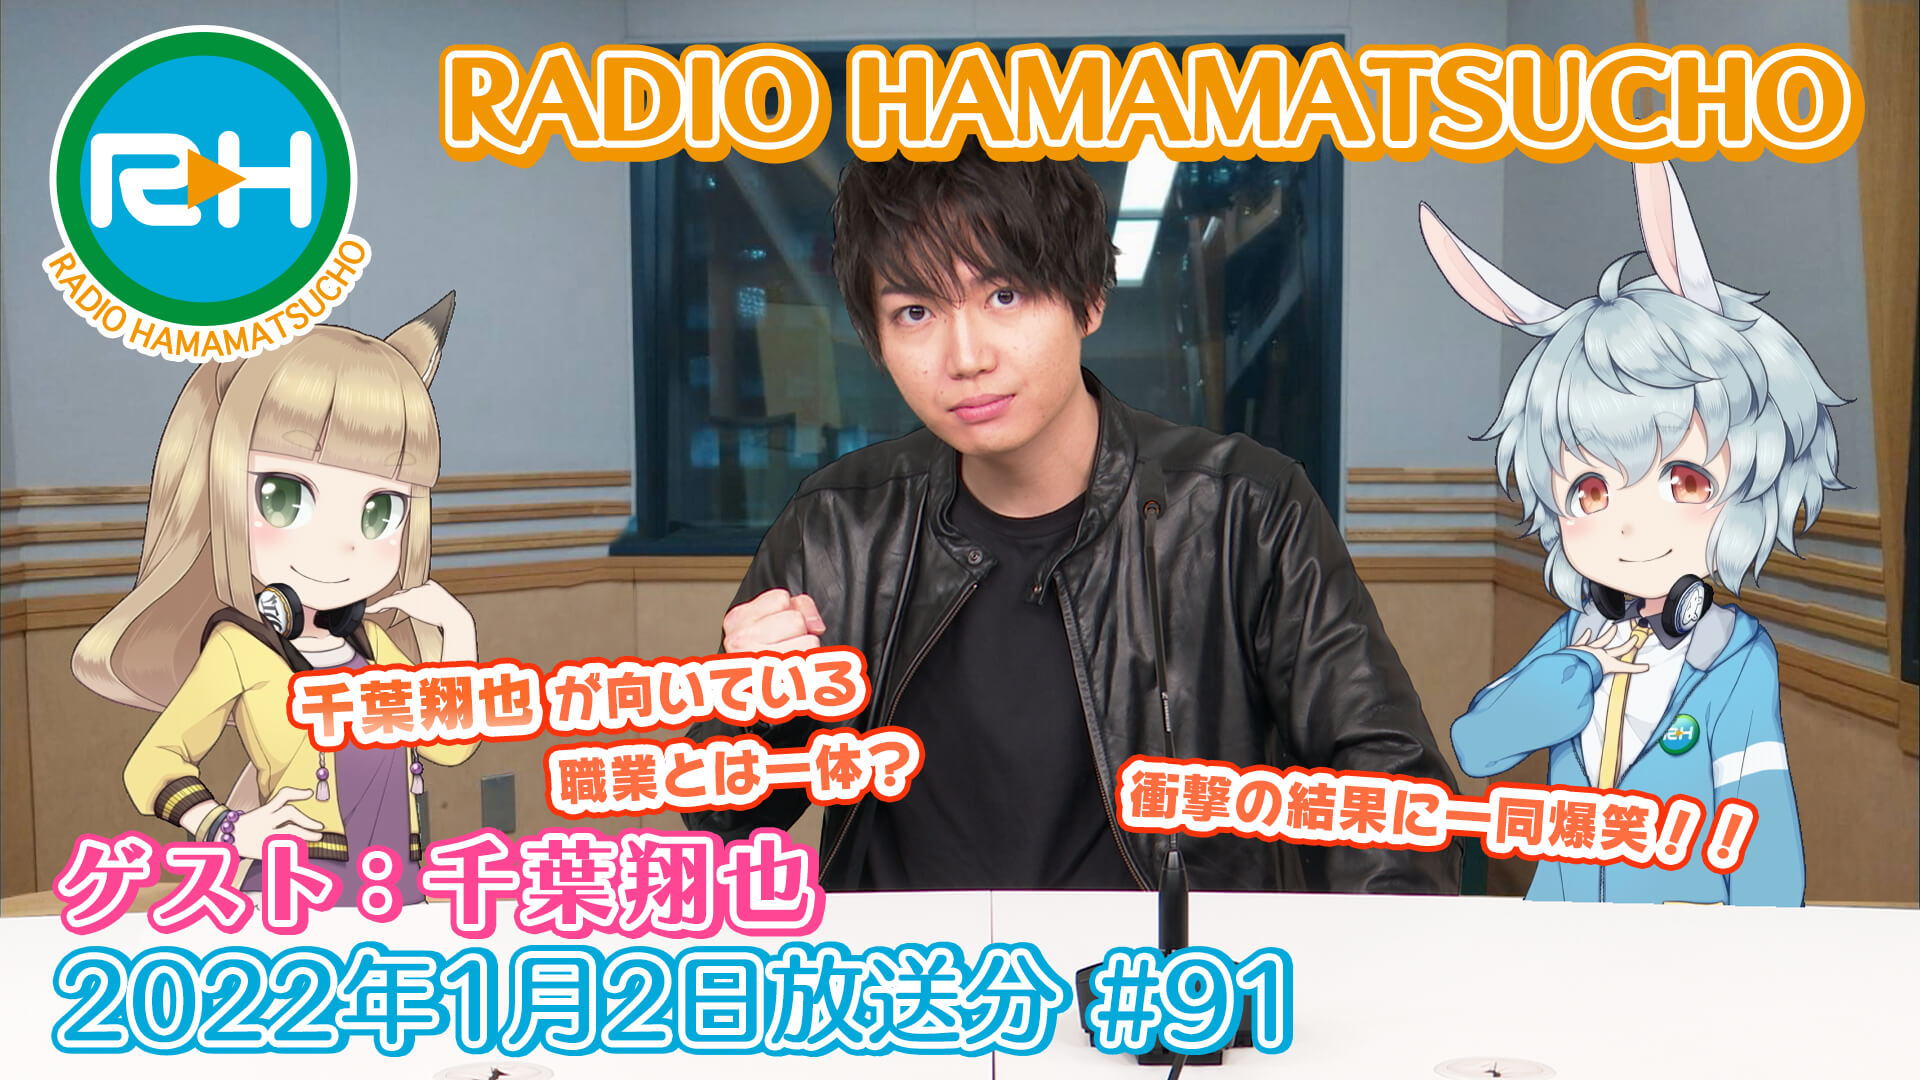 RADIO HAMAMATSUCHO 第91回 (2022年1月2日放送分) ゲスト: 千葉翔也